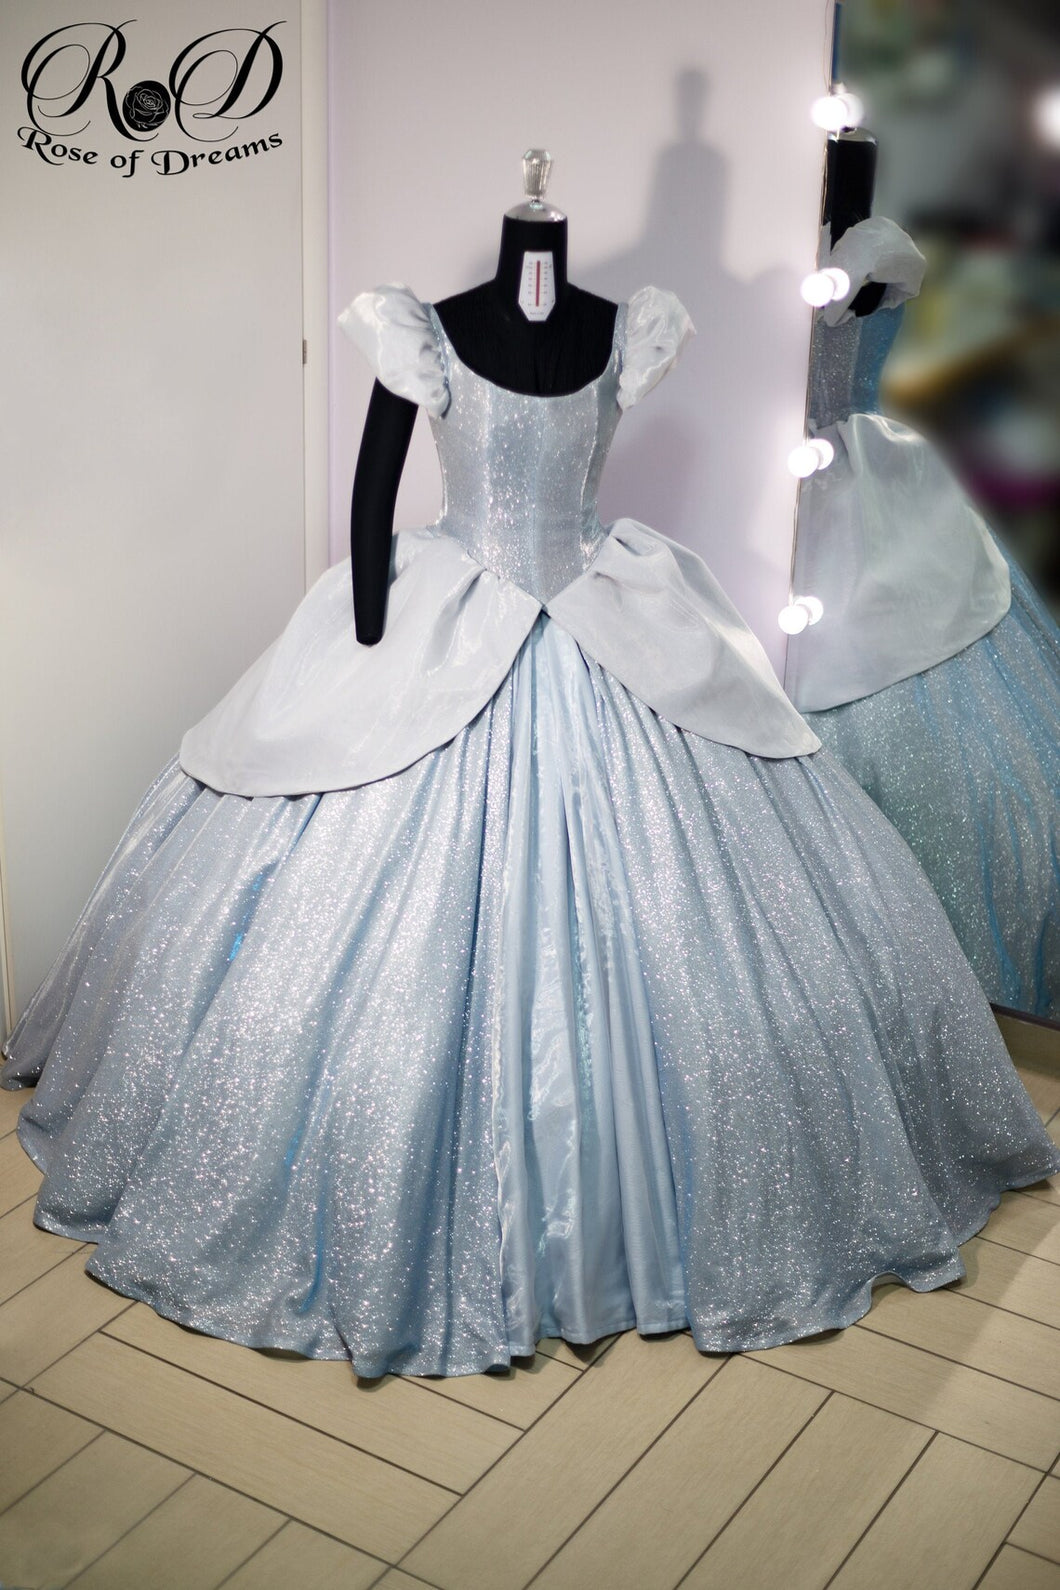 Cinderella cosplay costume